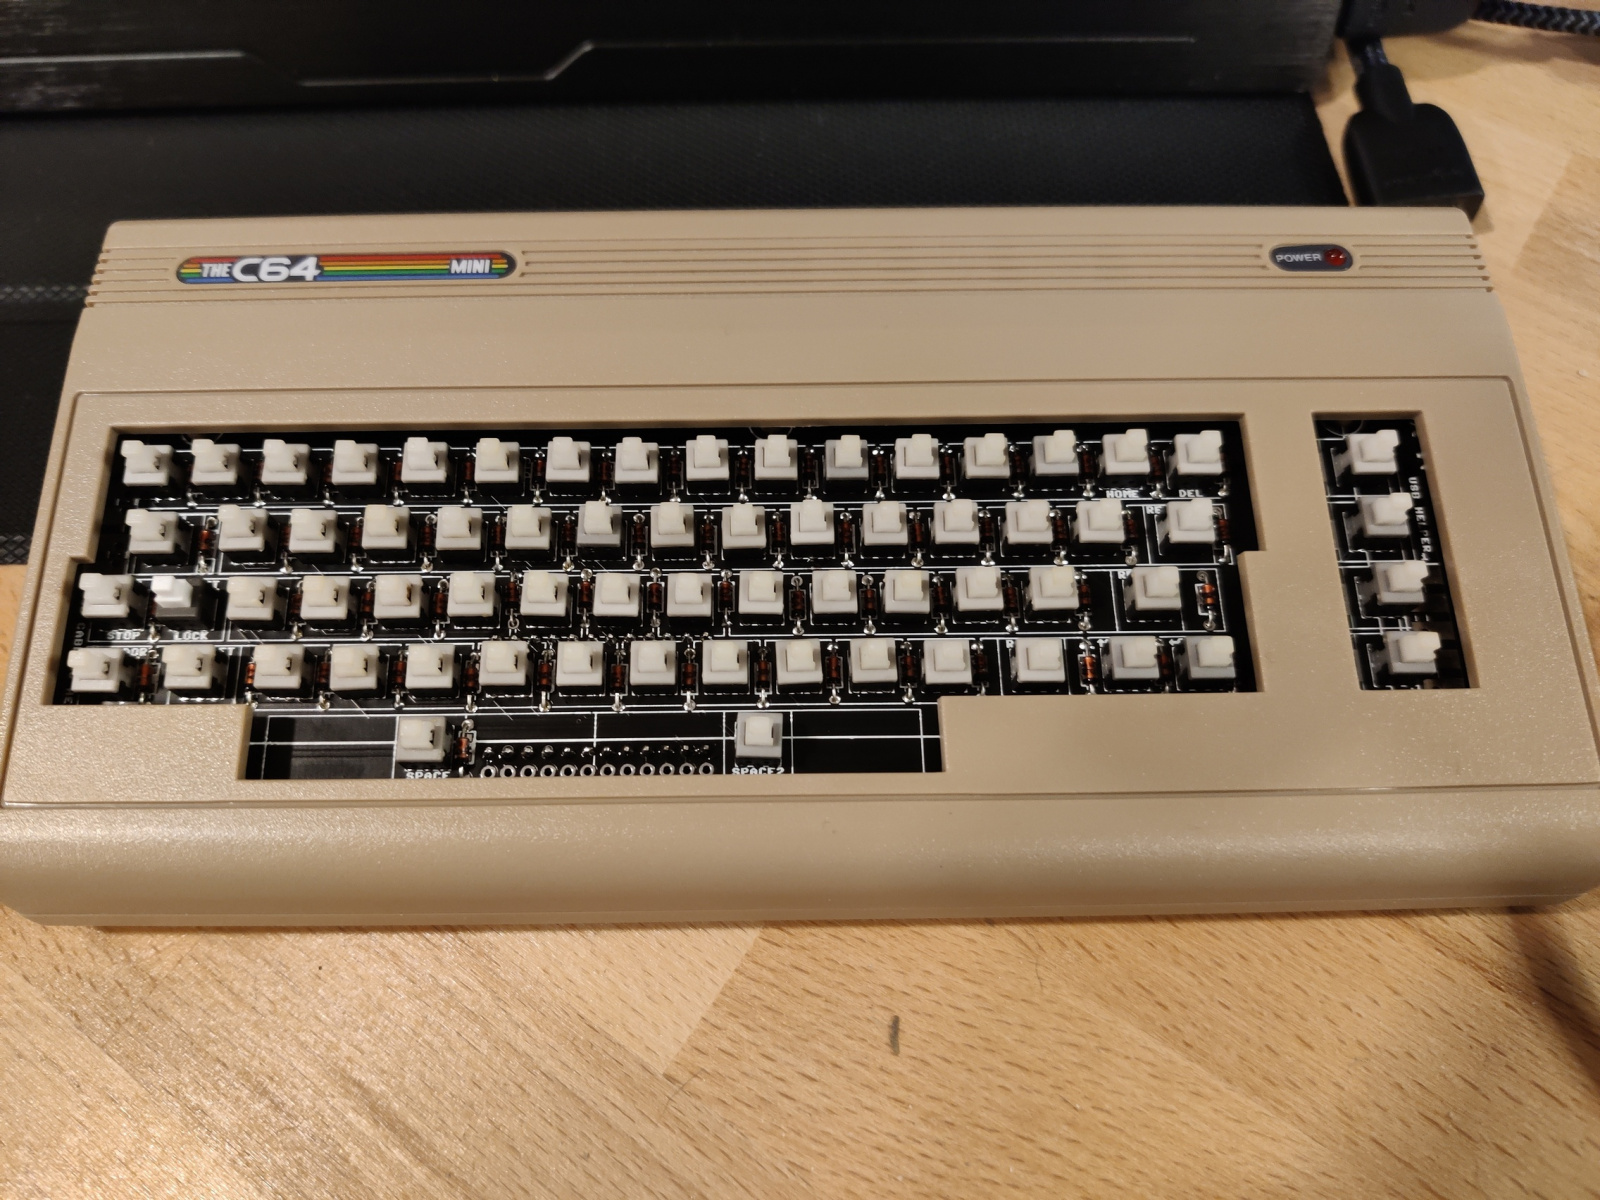 » C64 Mini – functional keyboard